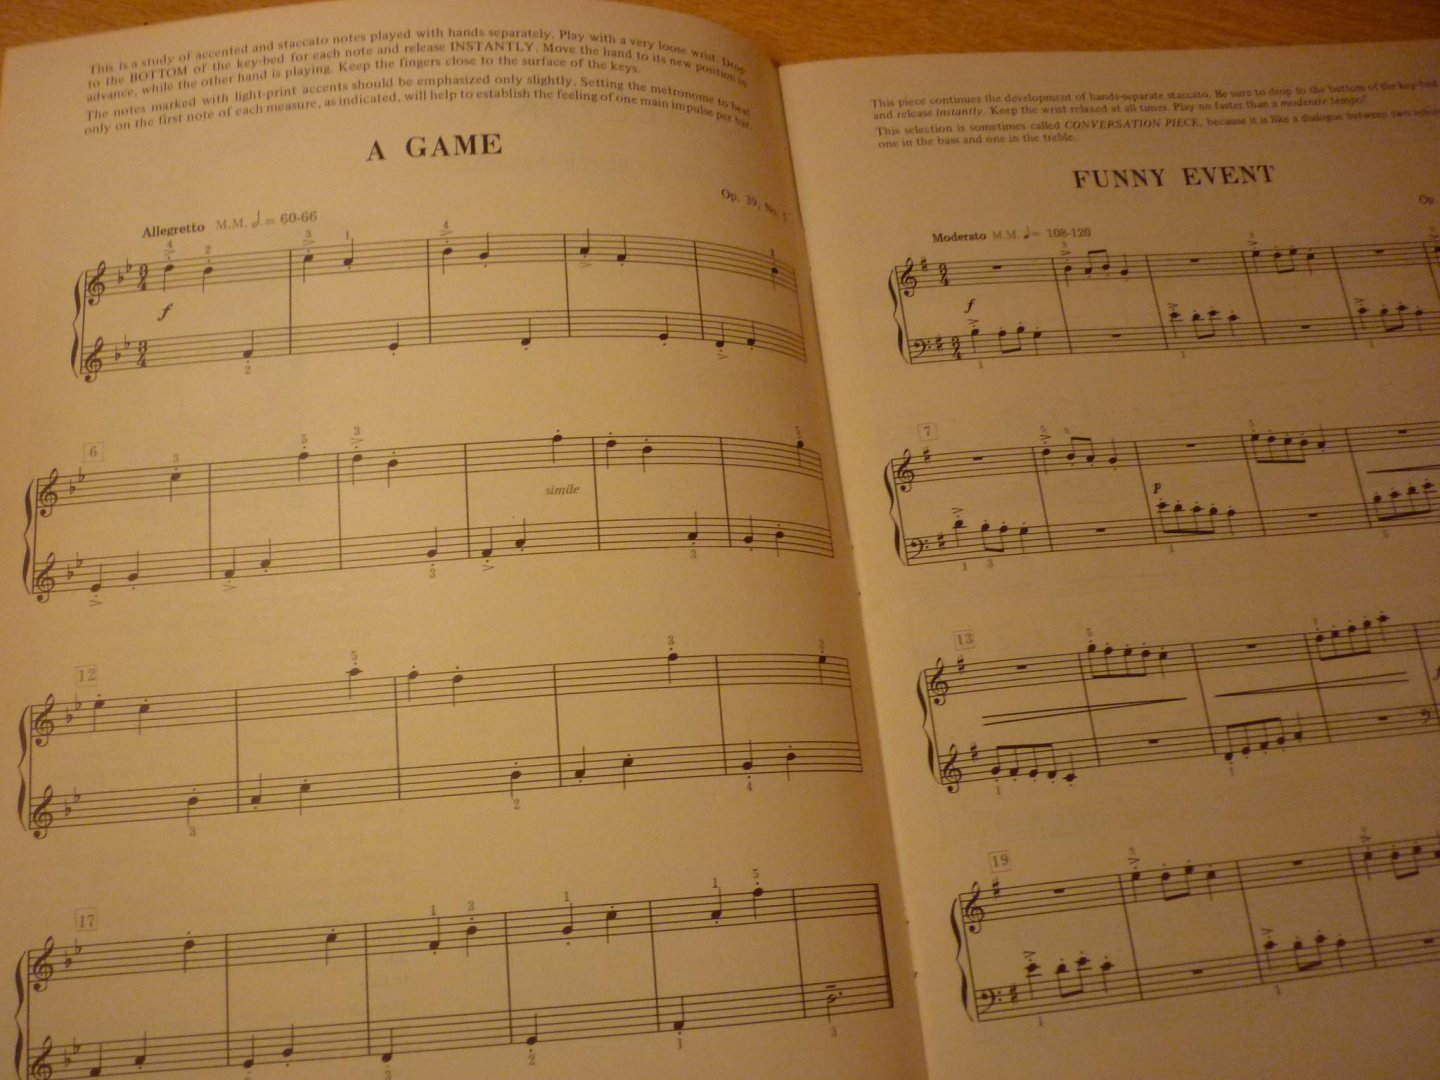 Kabalevsky T - The first book for pianists (Willard A. Palmer)